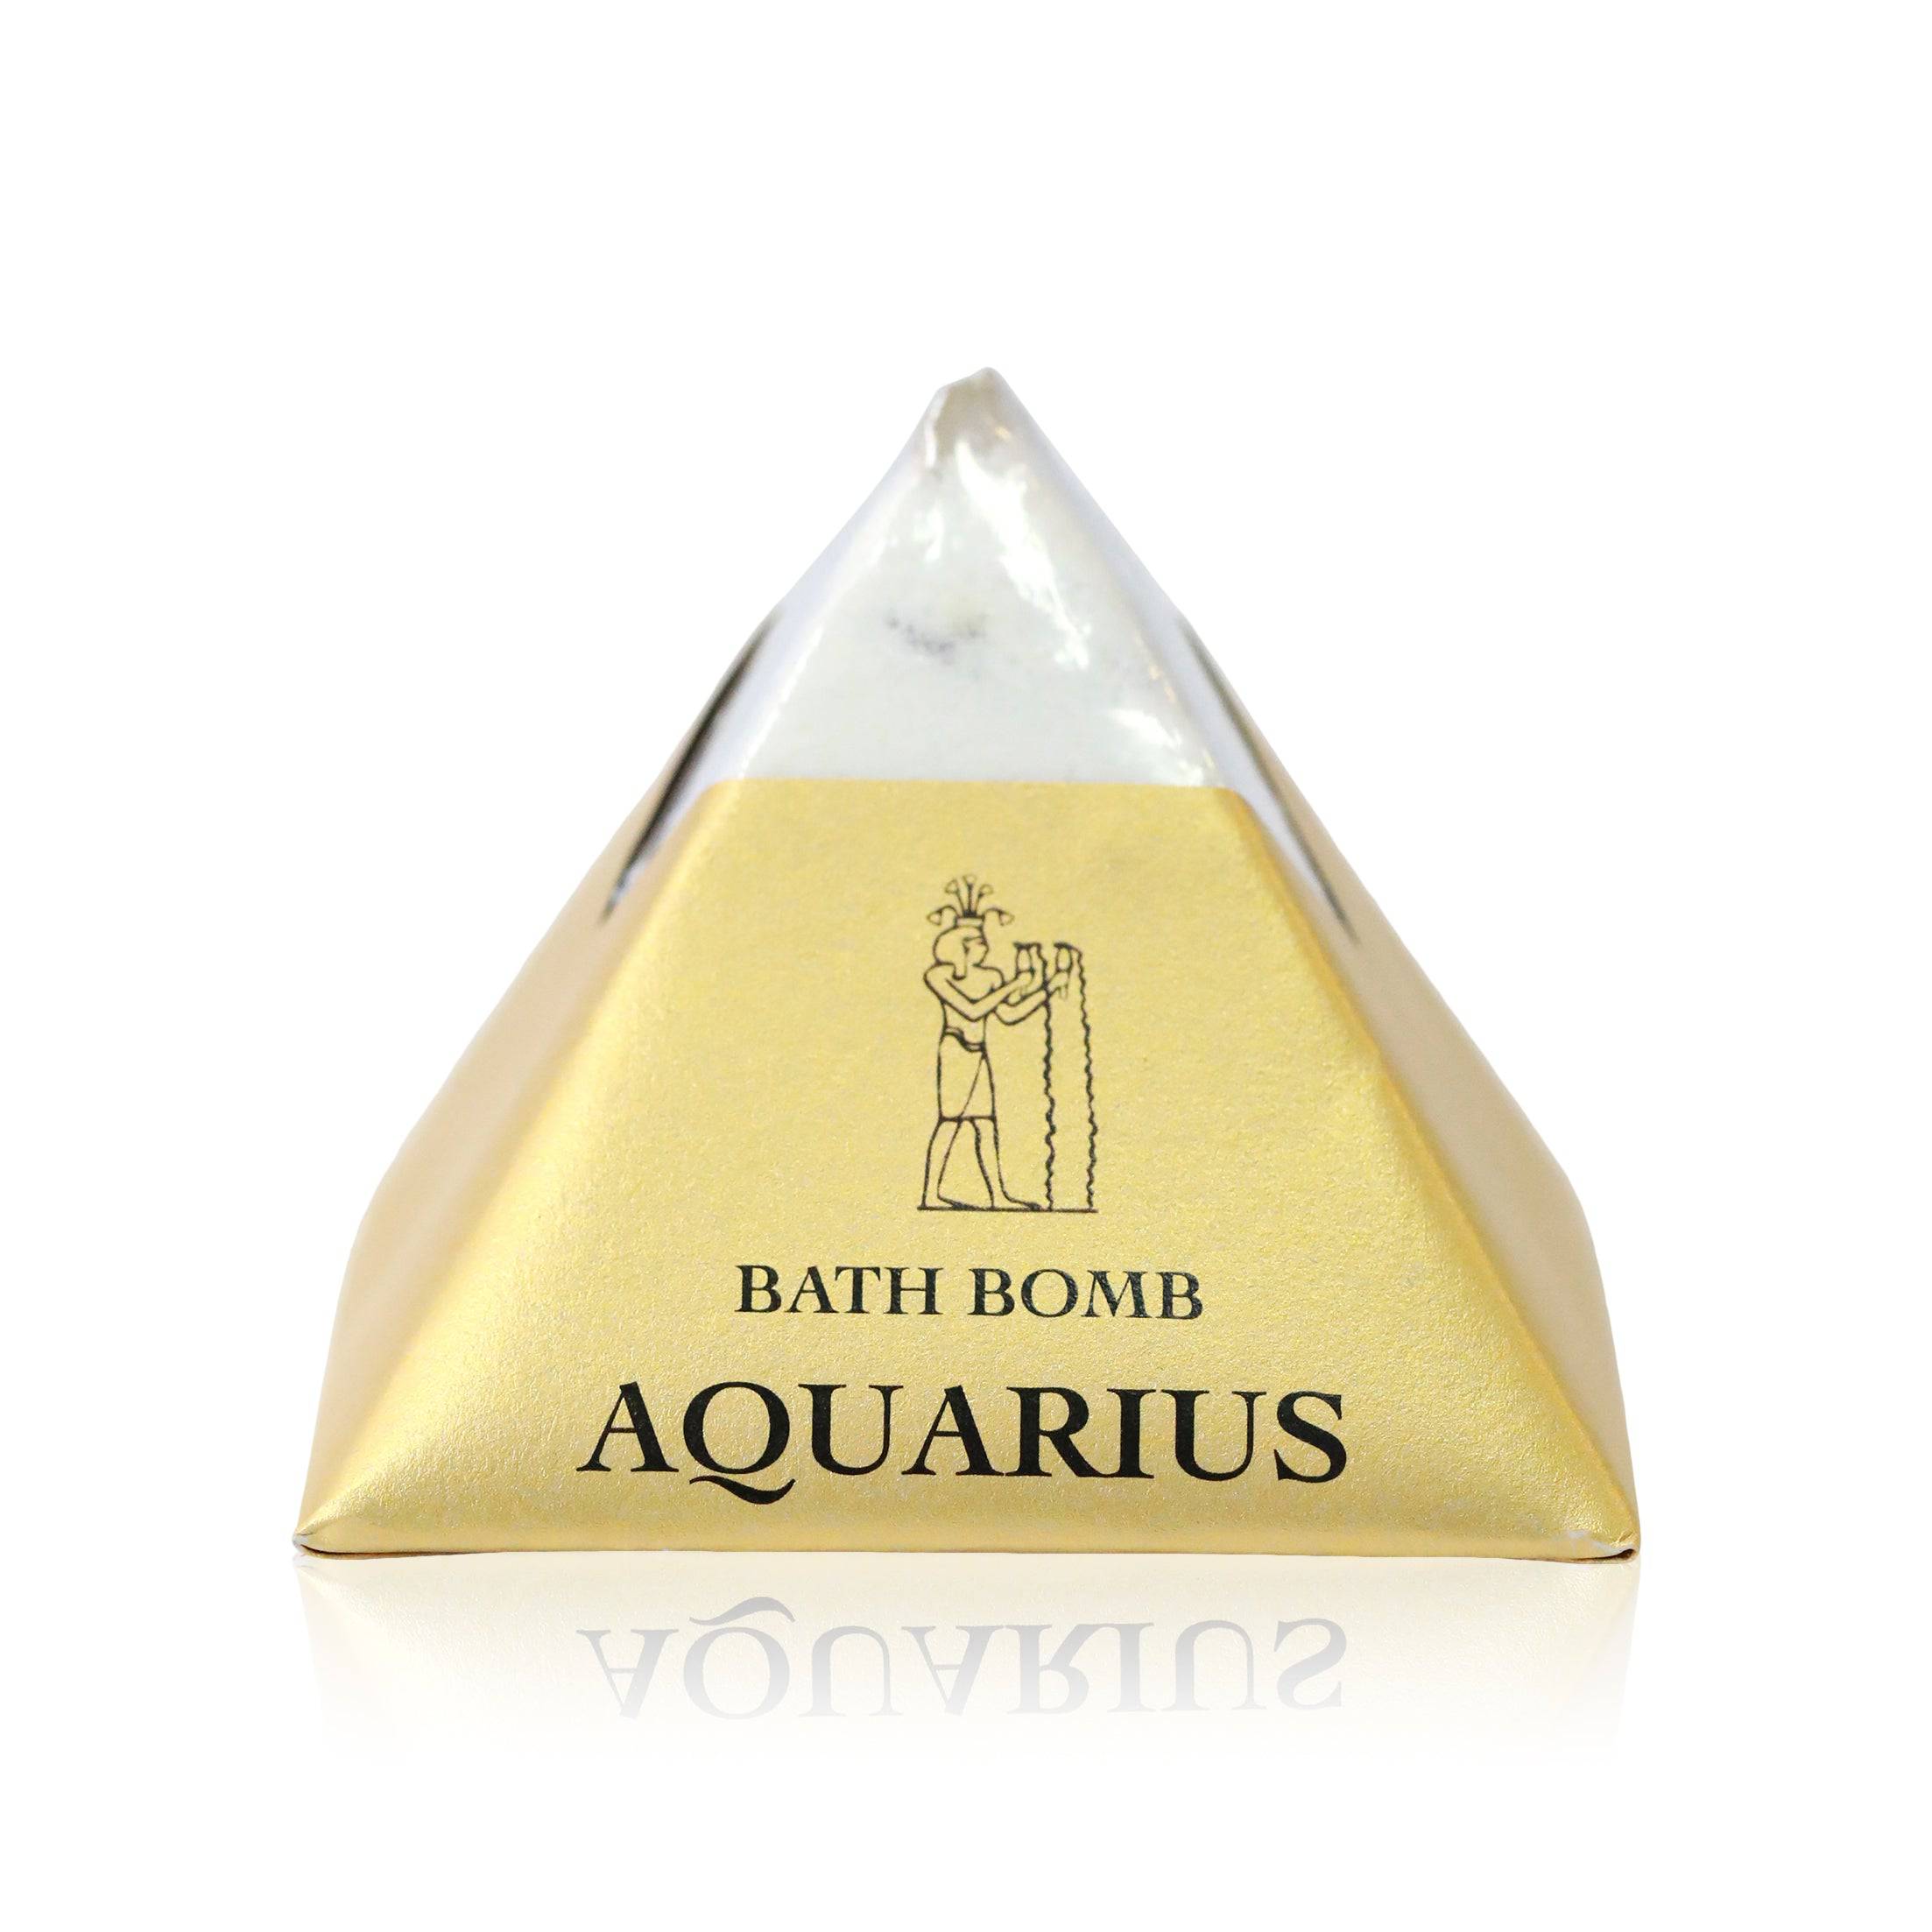 Aquarius Zodiac Sign Pyramid Bath Bomb - The Gilded Witch